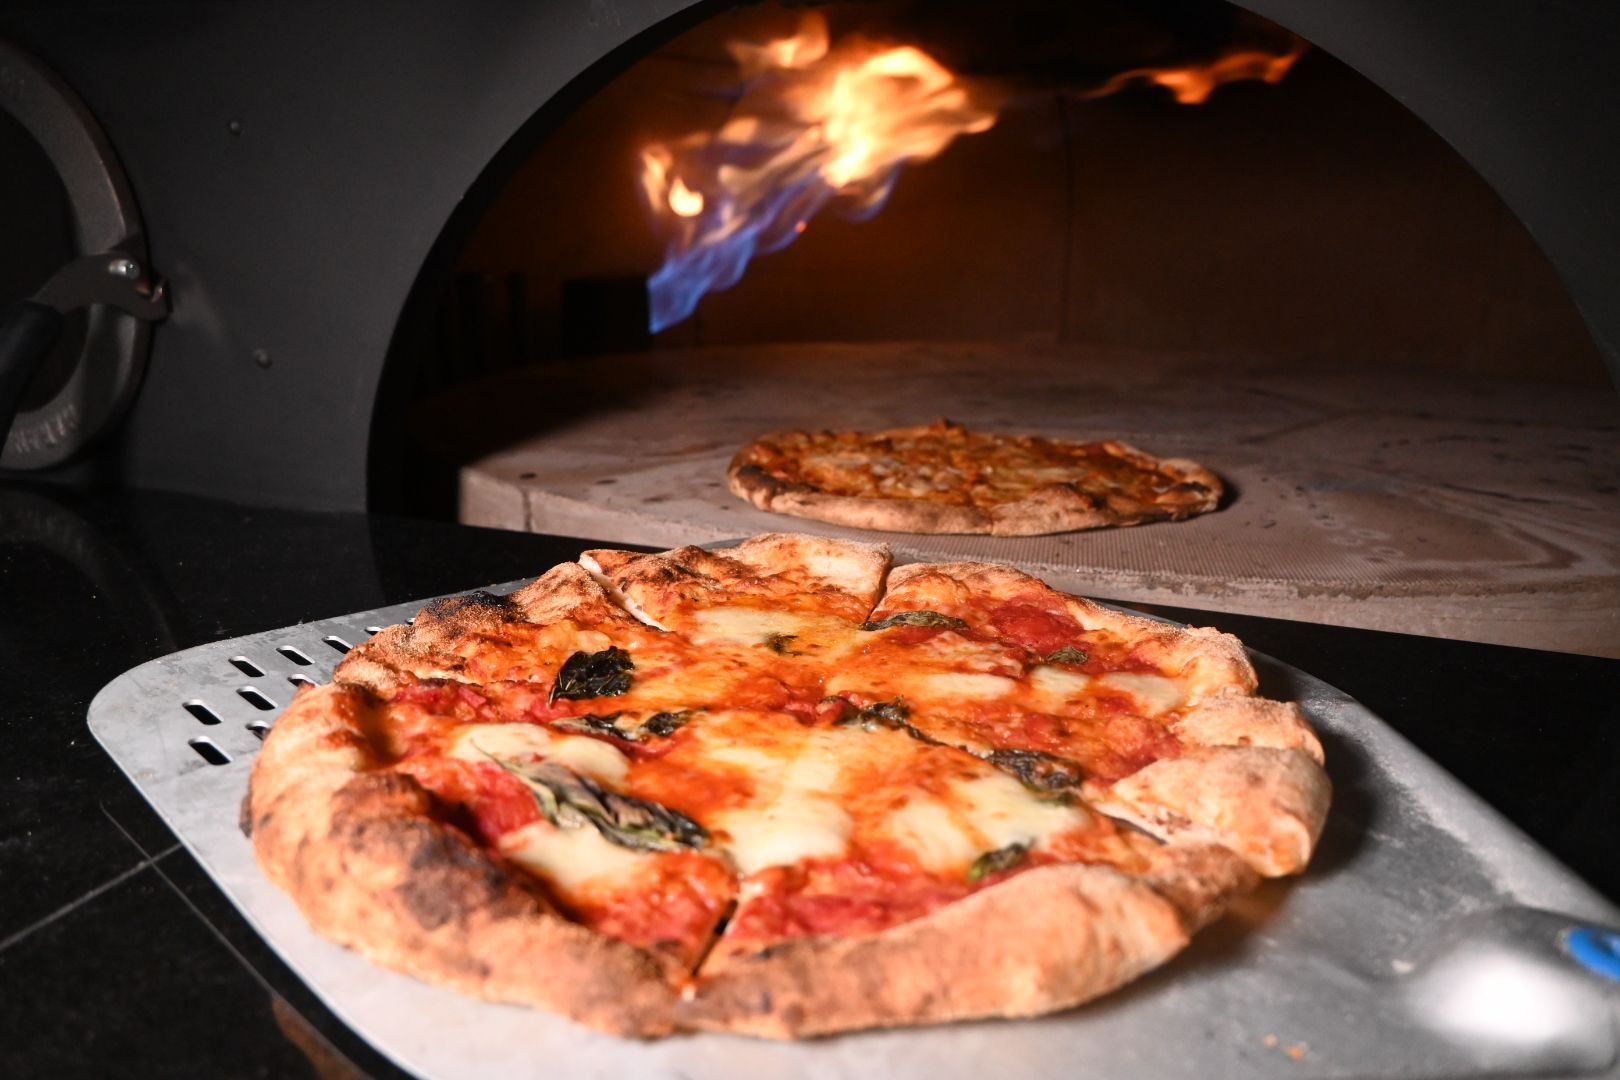 Bella Napoli - Wood Fired Pizzas & Italian Restaurant In Schaumburg, IL